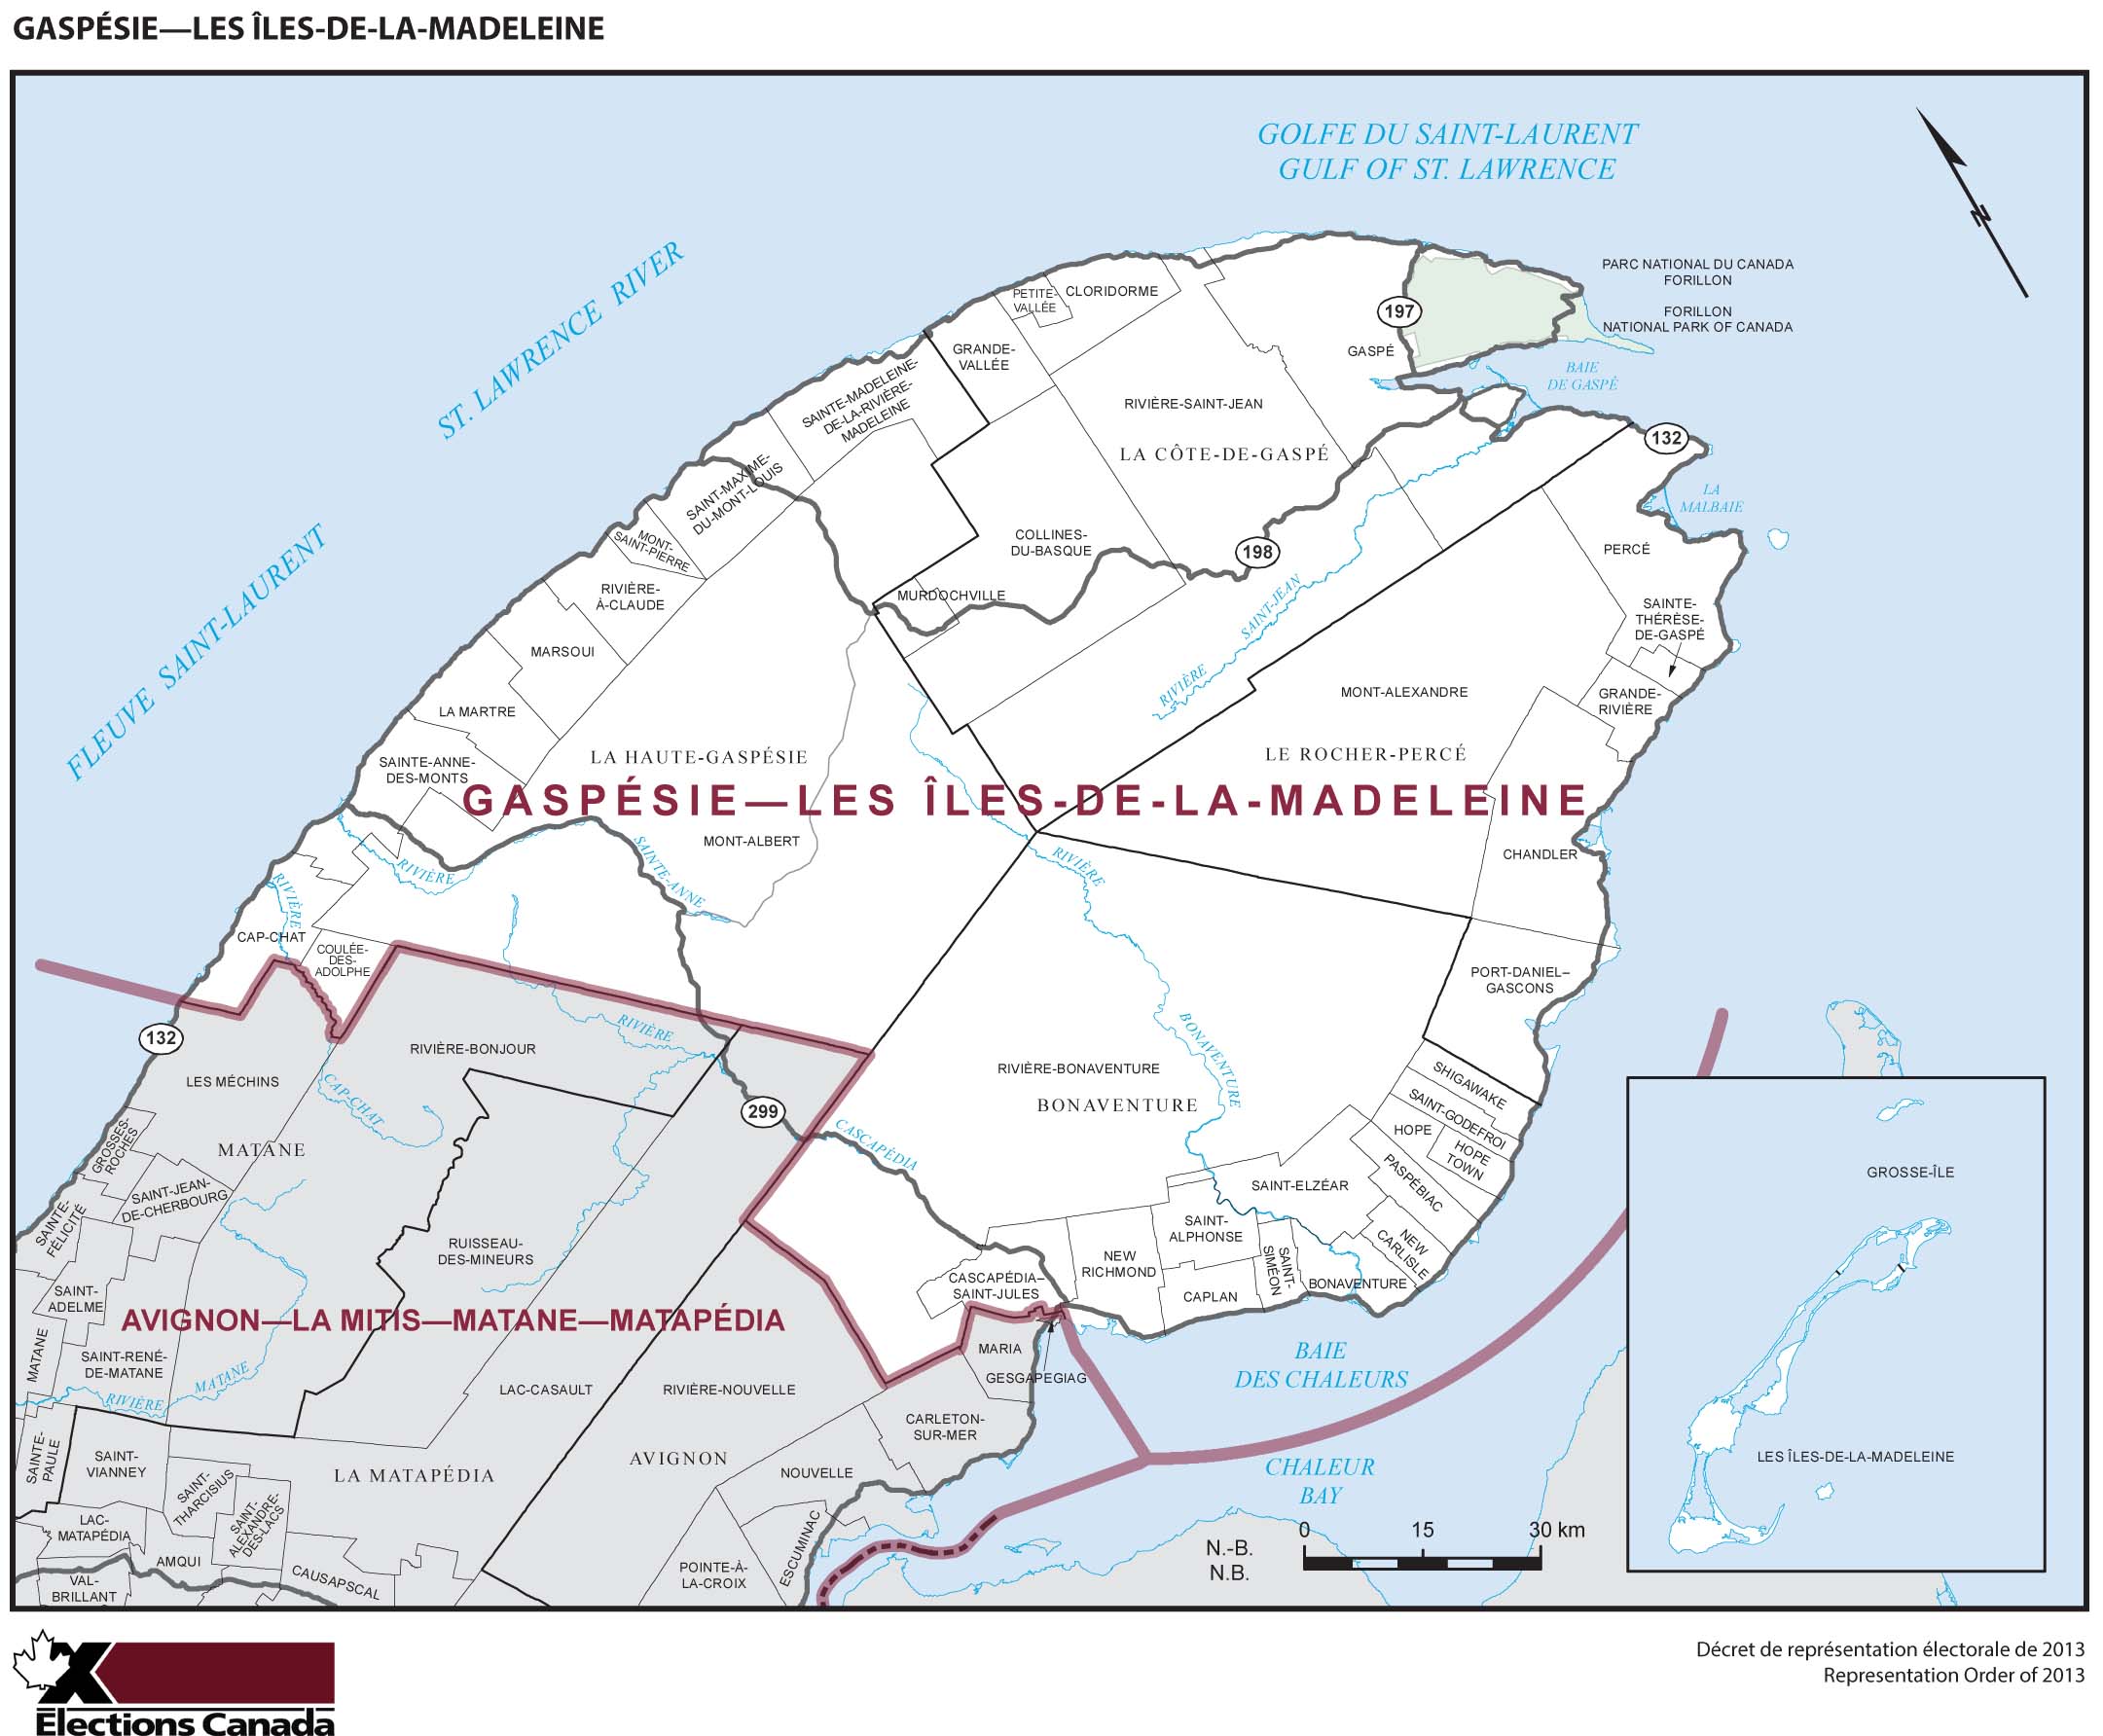 Map: Gaspésie--Les Îles-de-la-Madeleine, Federal electoral district, 2013 Representation Order (in white), Quebec